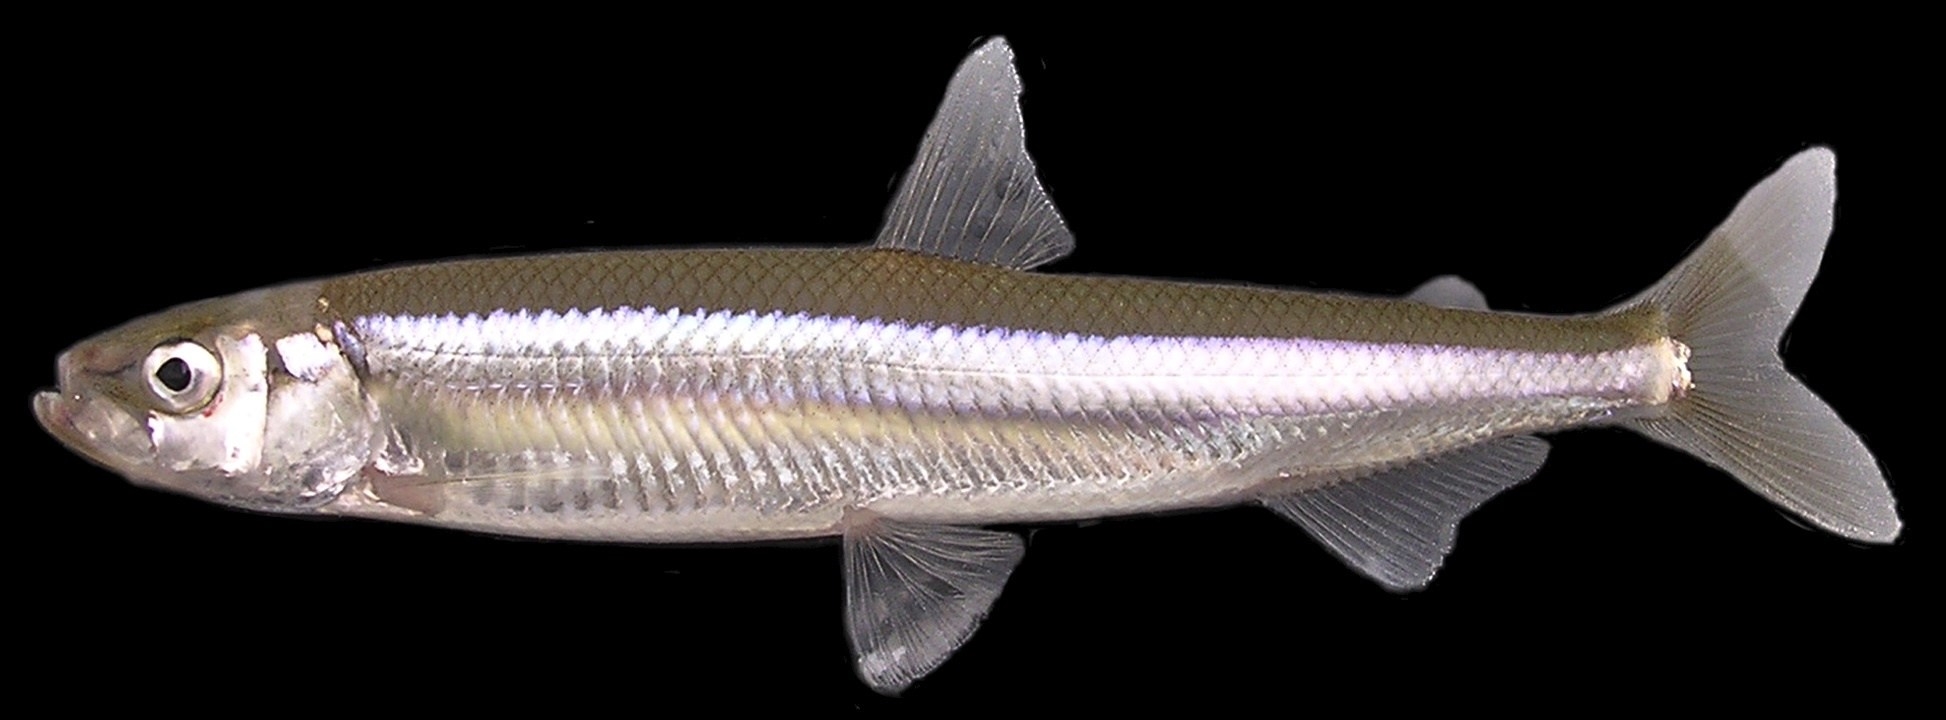 Ряпушка сибирская фото и описание – каталог рыб, смотреть онлайн